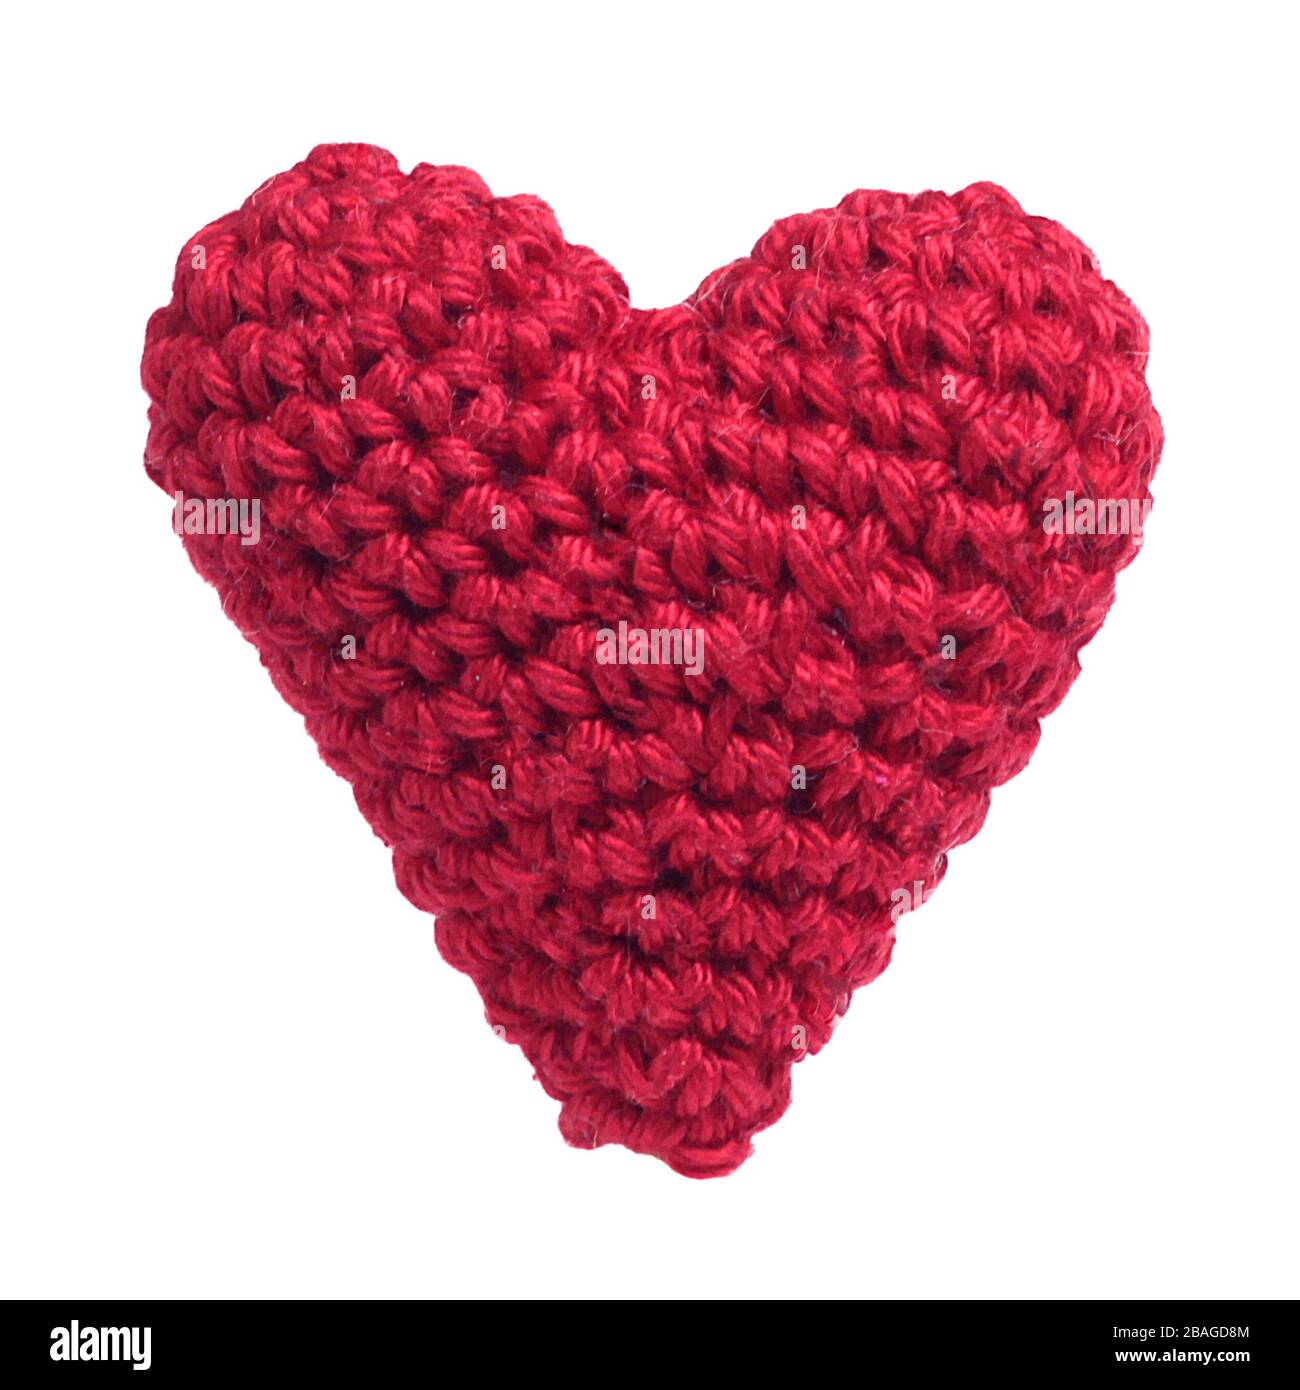 red heart knitting